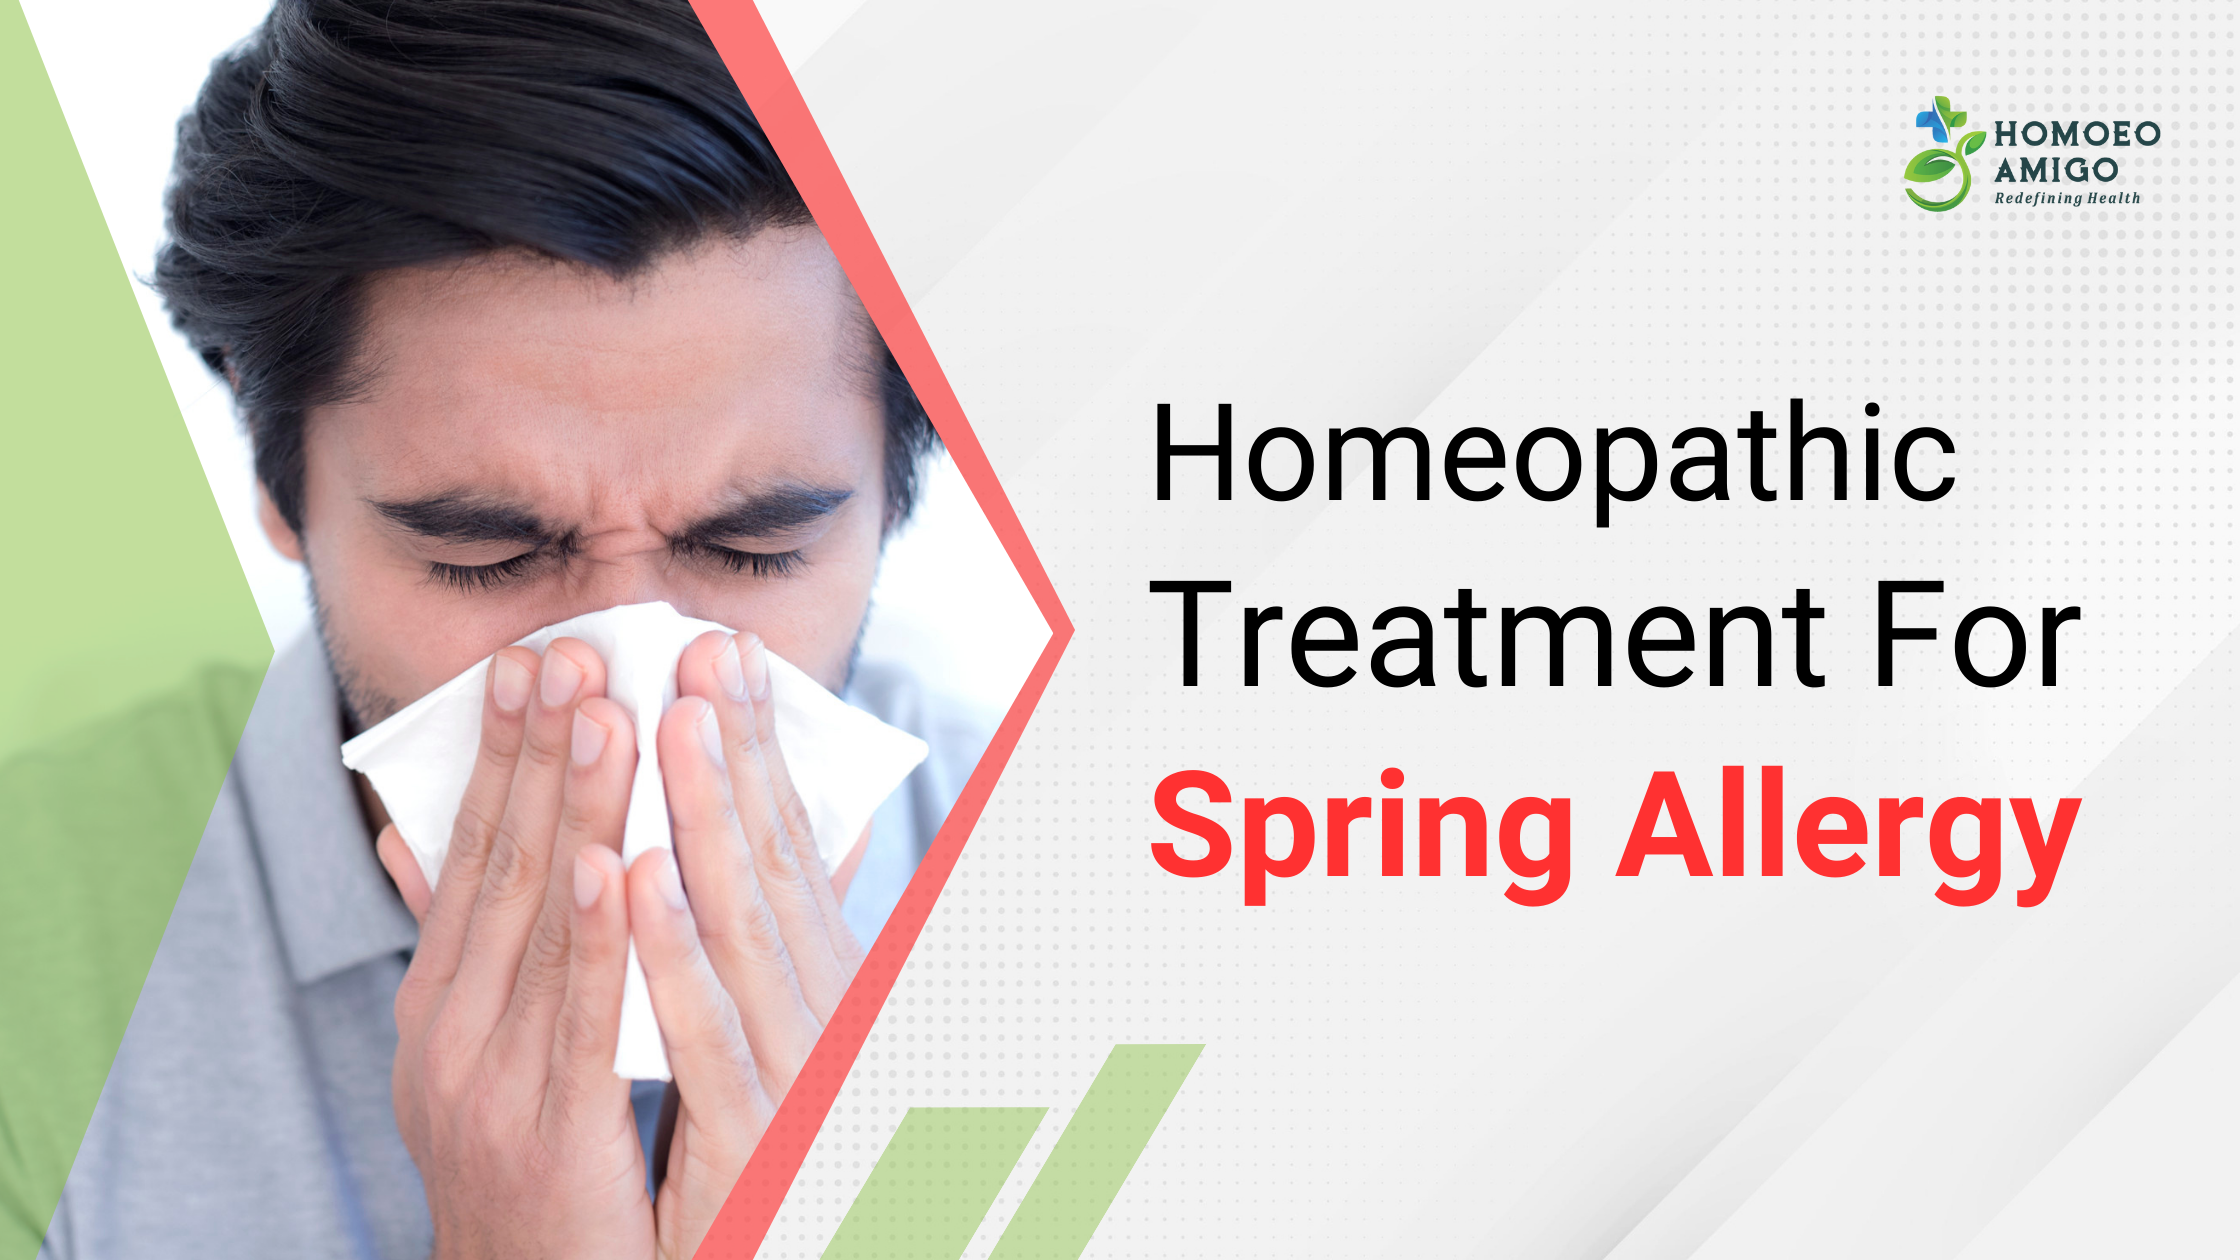 Homeopathic Treatment For Spring Allergy - Homoeo Amigo